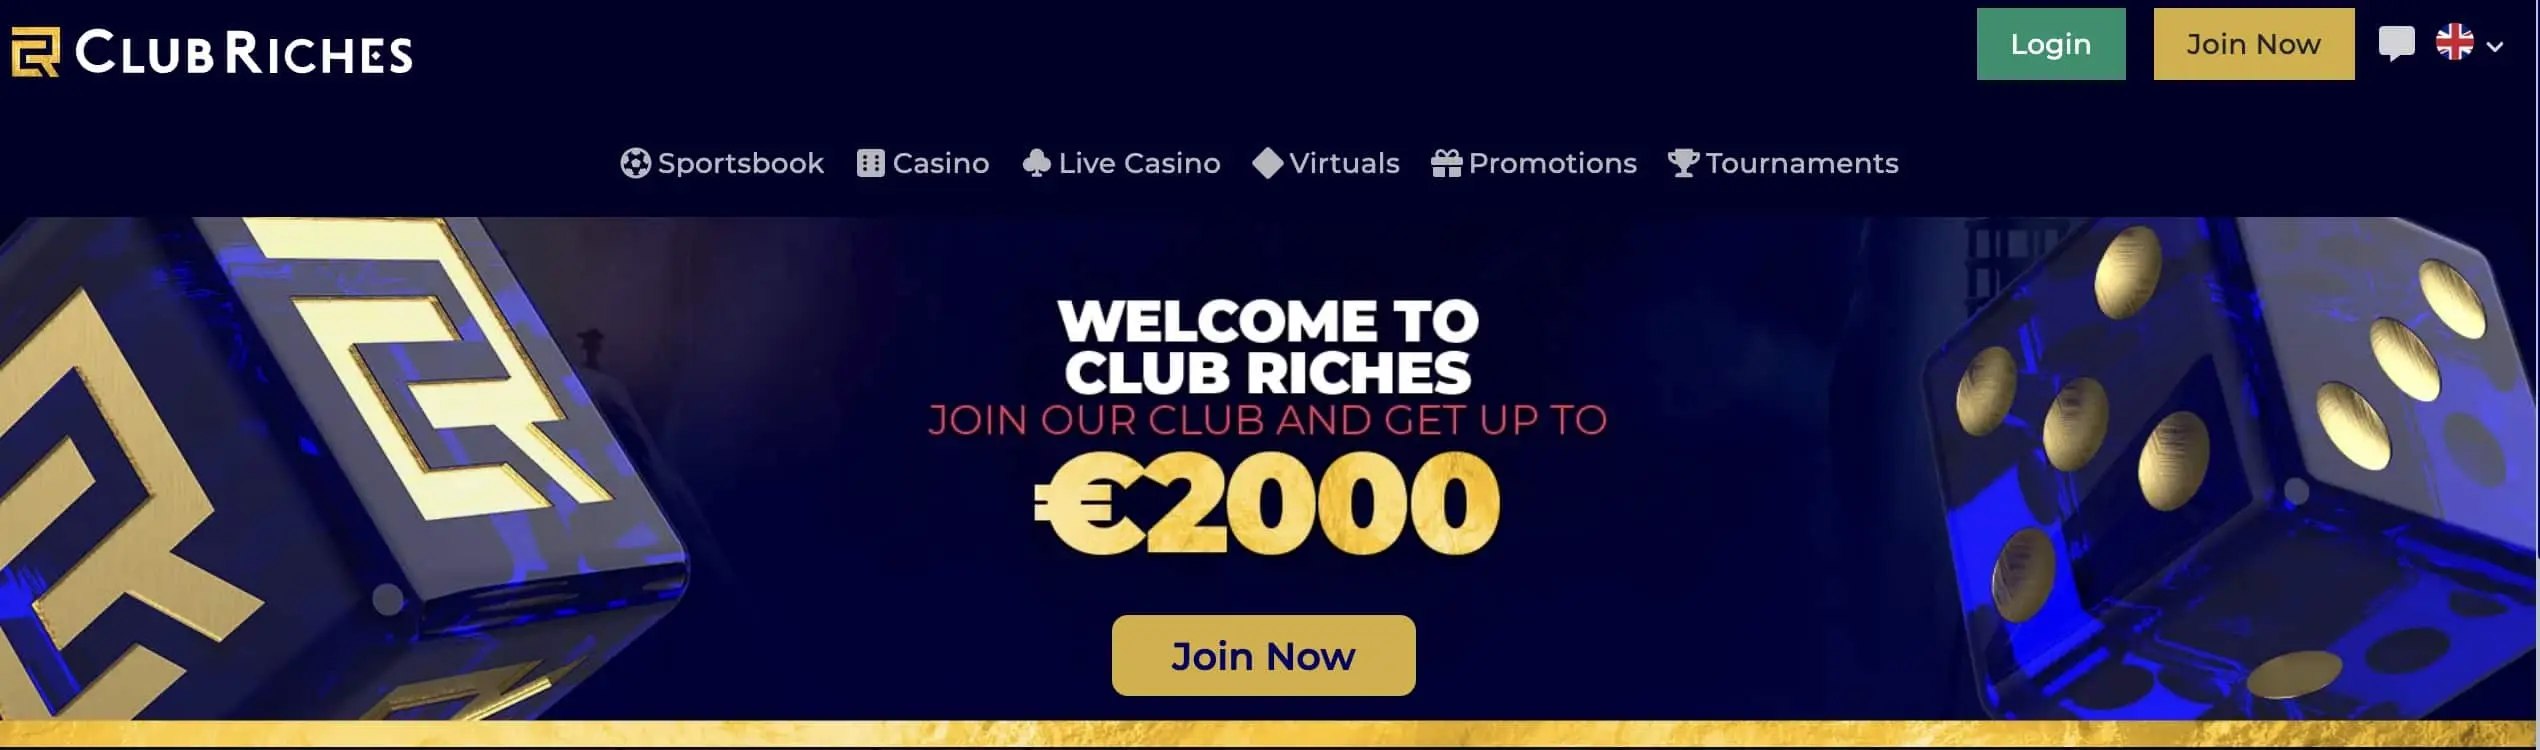 club riches homepage